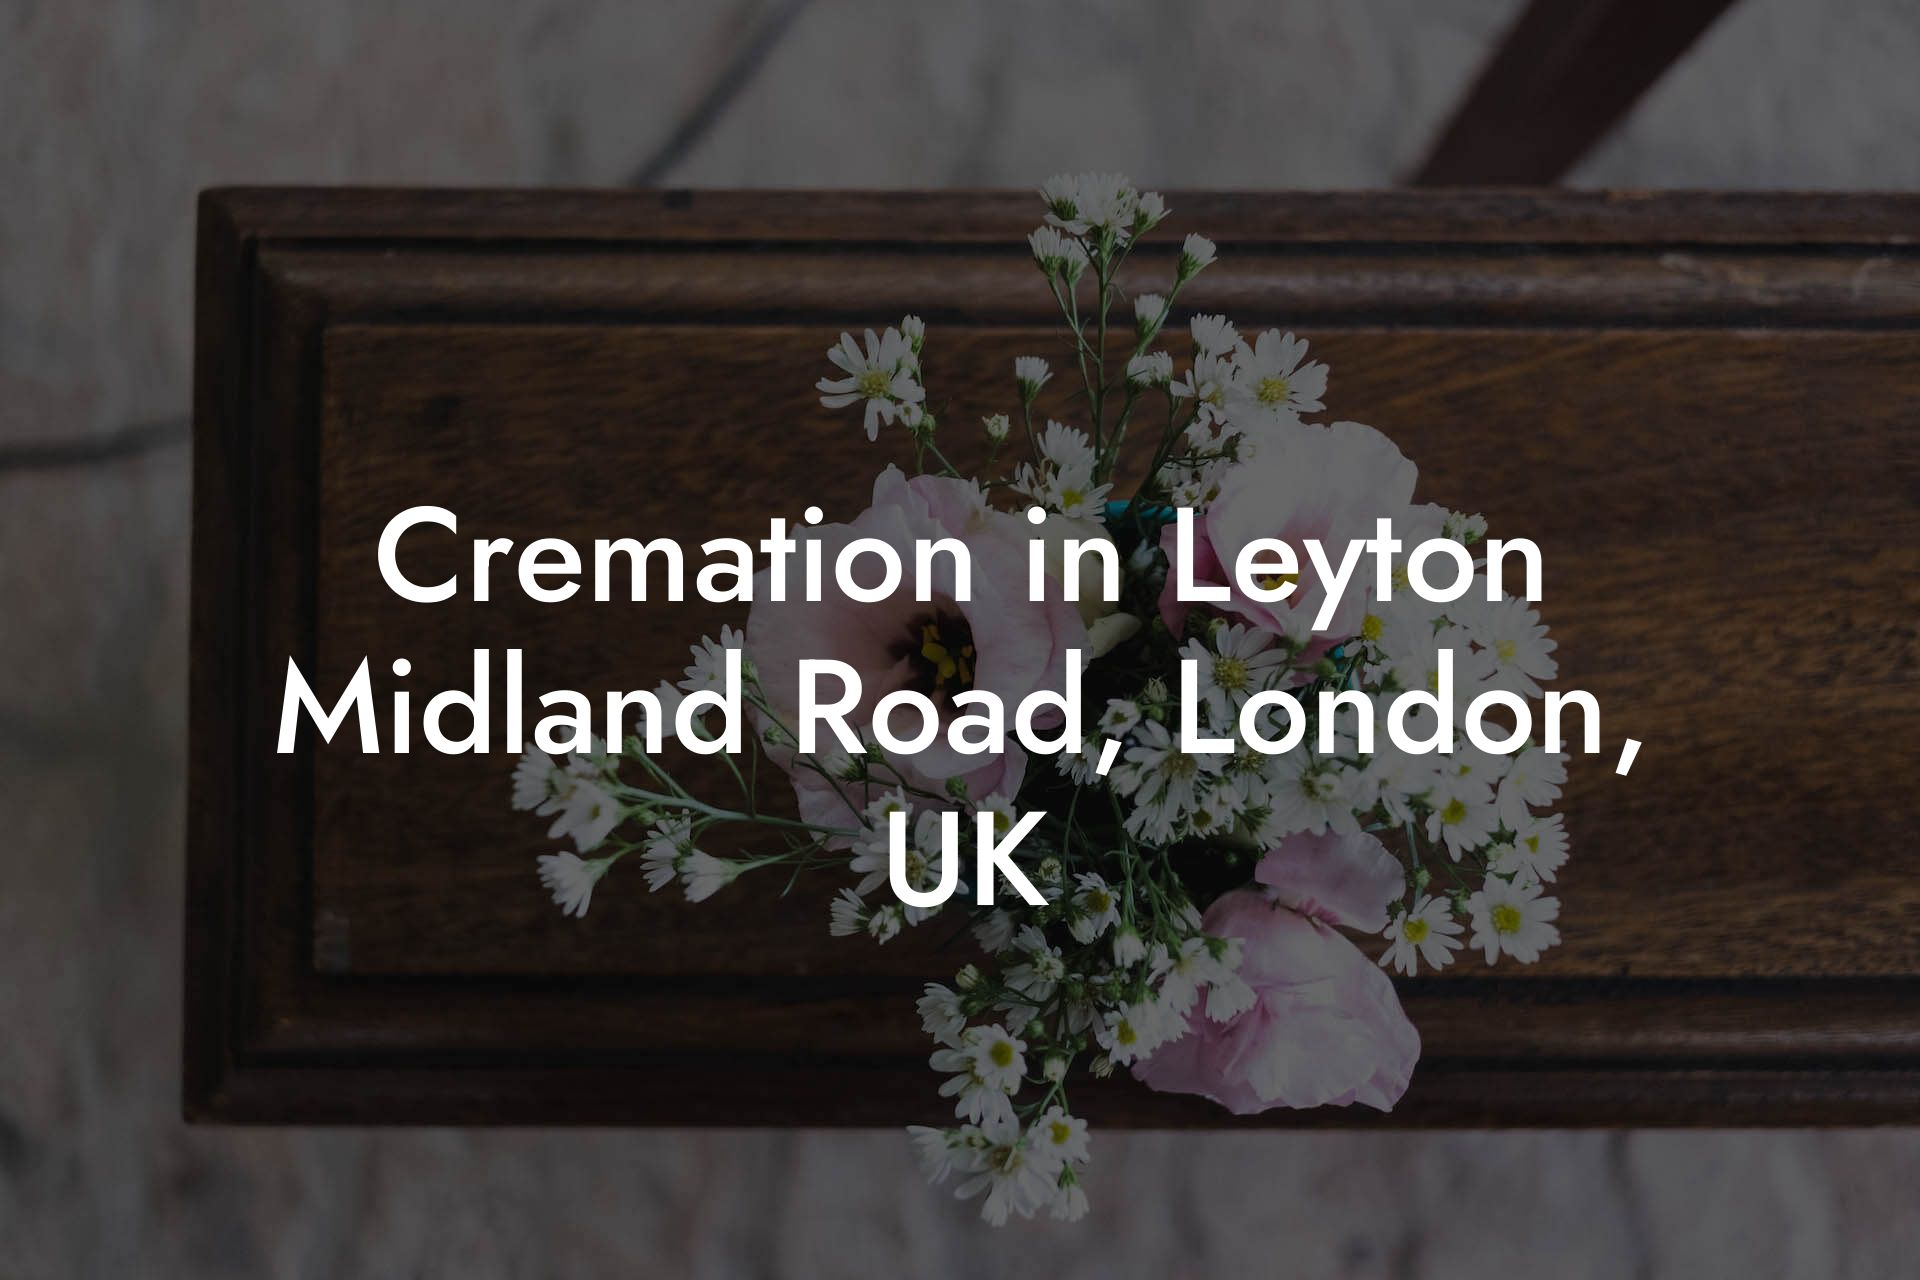 Cremation in Leyton Midland Road, London, UK